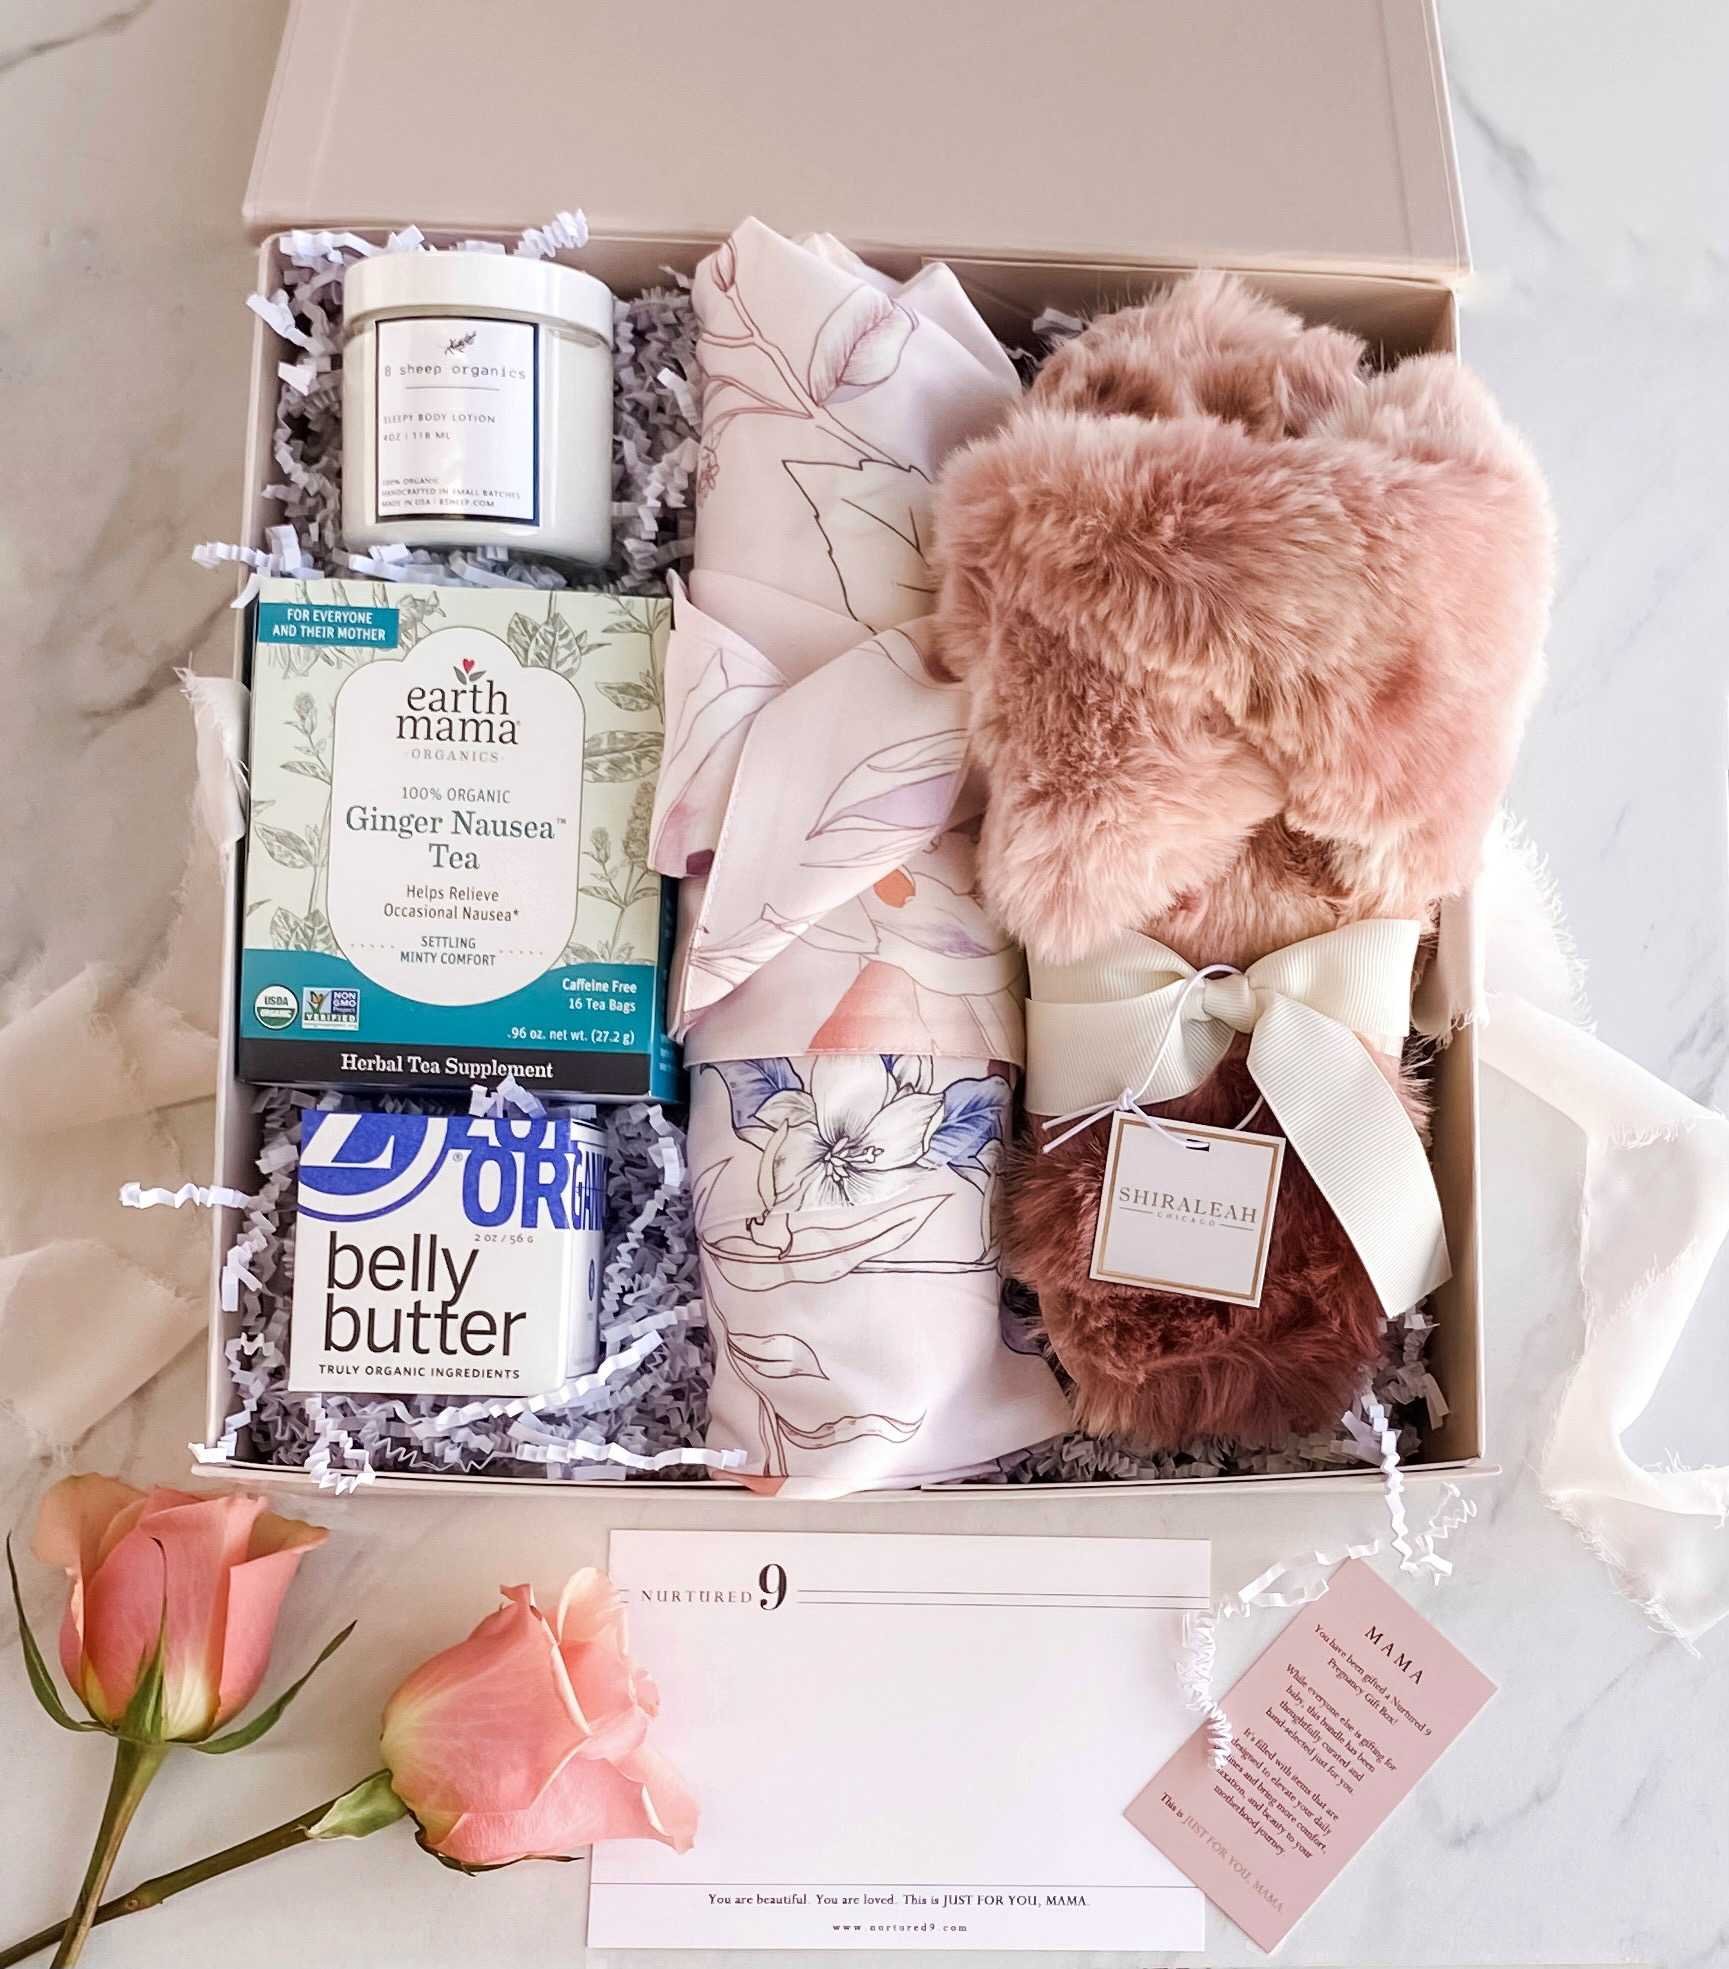 Congratulations Gift Boxes  Pregnancy Congratulations Gifts